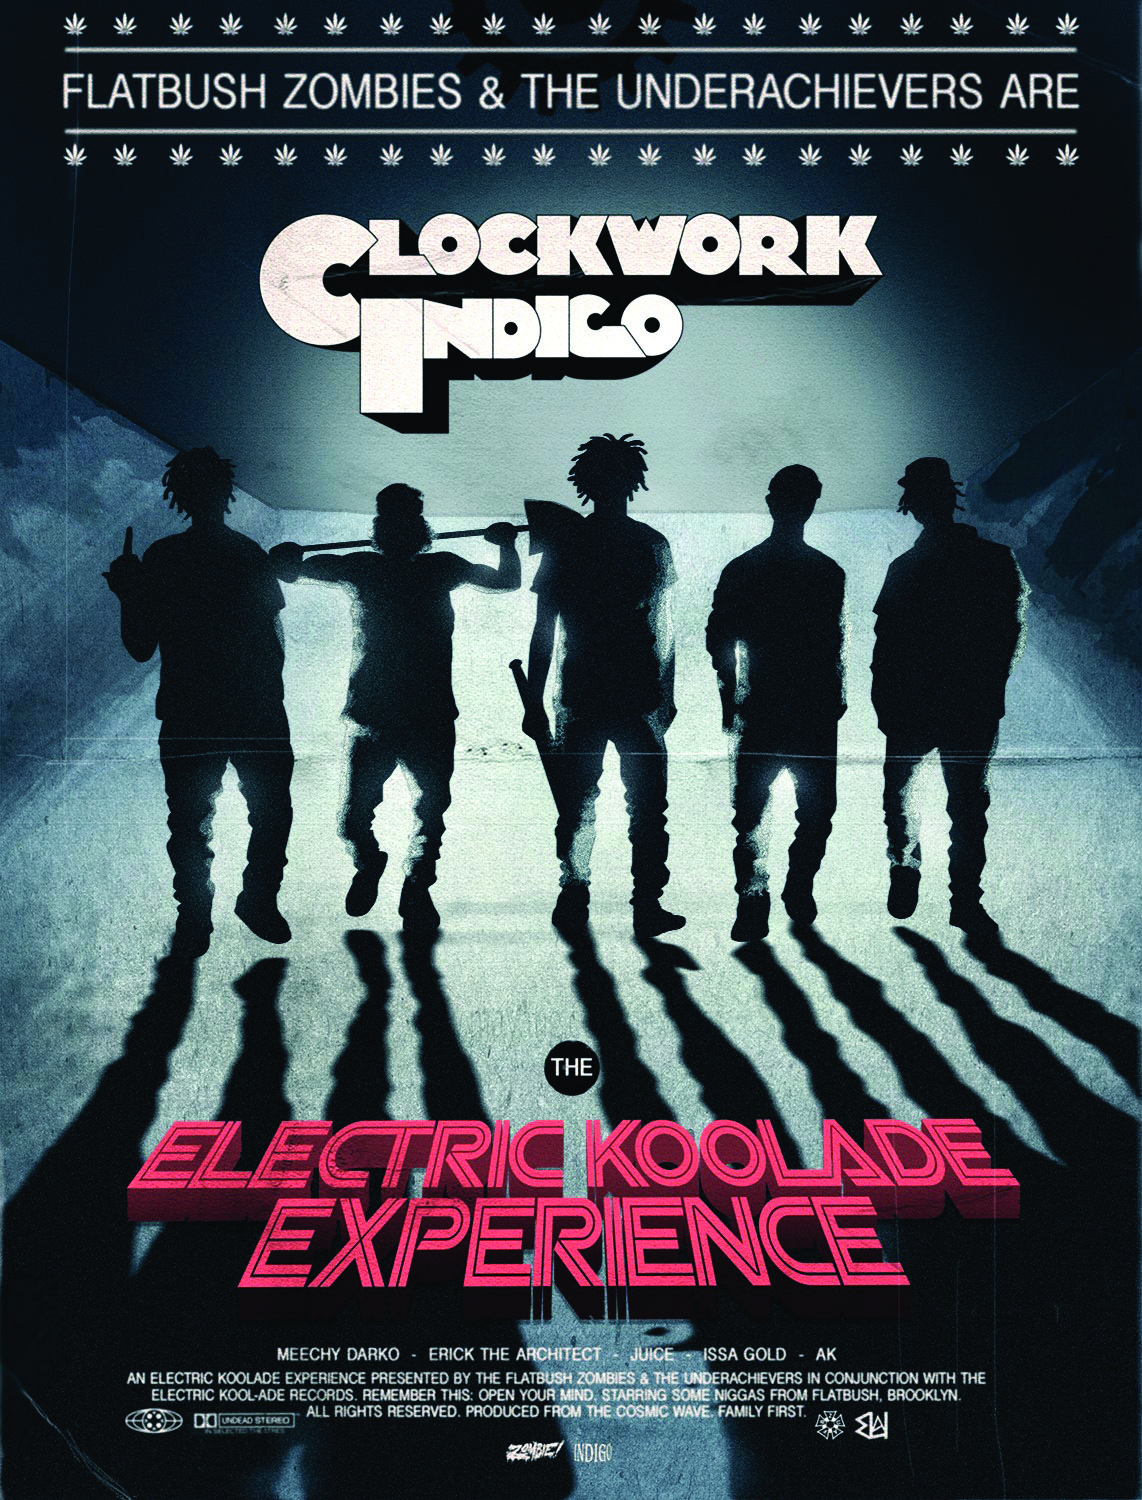 Flatbush Zombies and Underachievers release joint mixtape as Clockwork Indigo